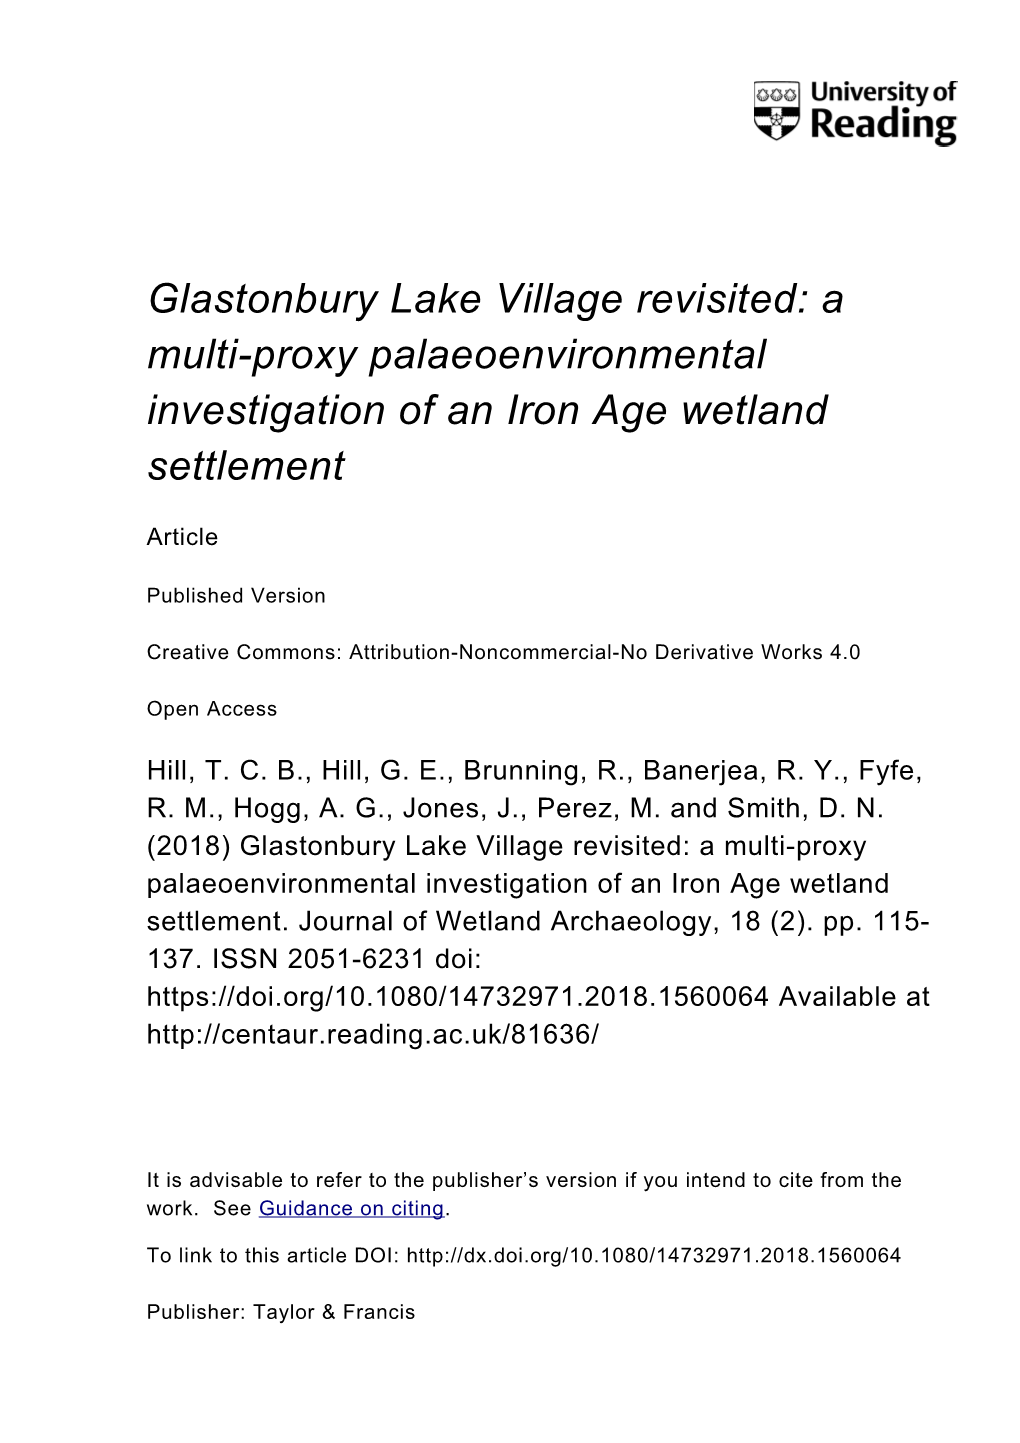 Glastonbury Lake Village Revisited: a Multi-Proxy Palaeoenvironmental Investigation of an Iron Age Wetland Settlement